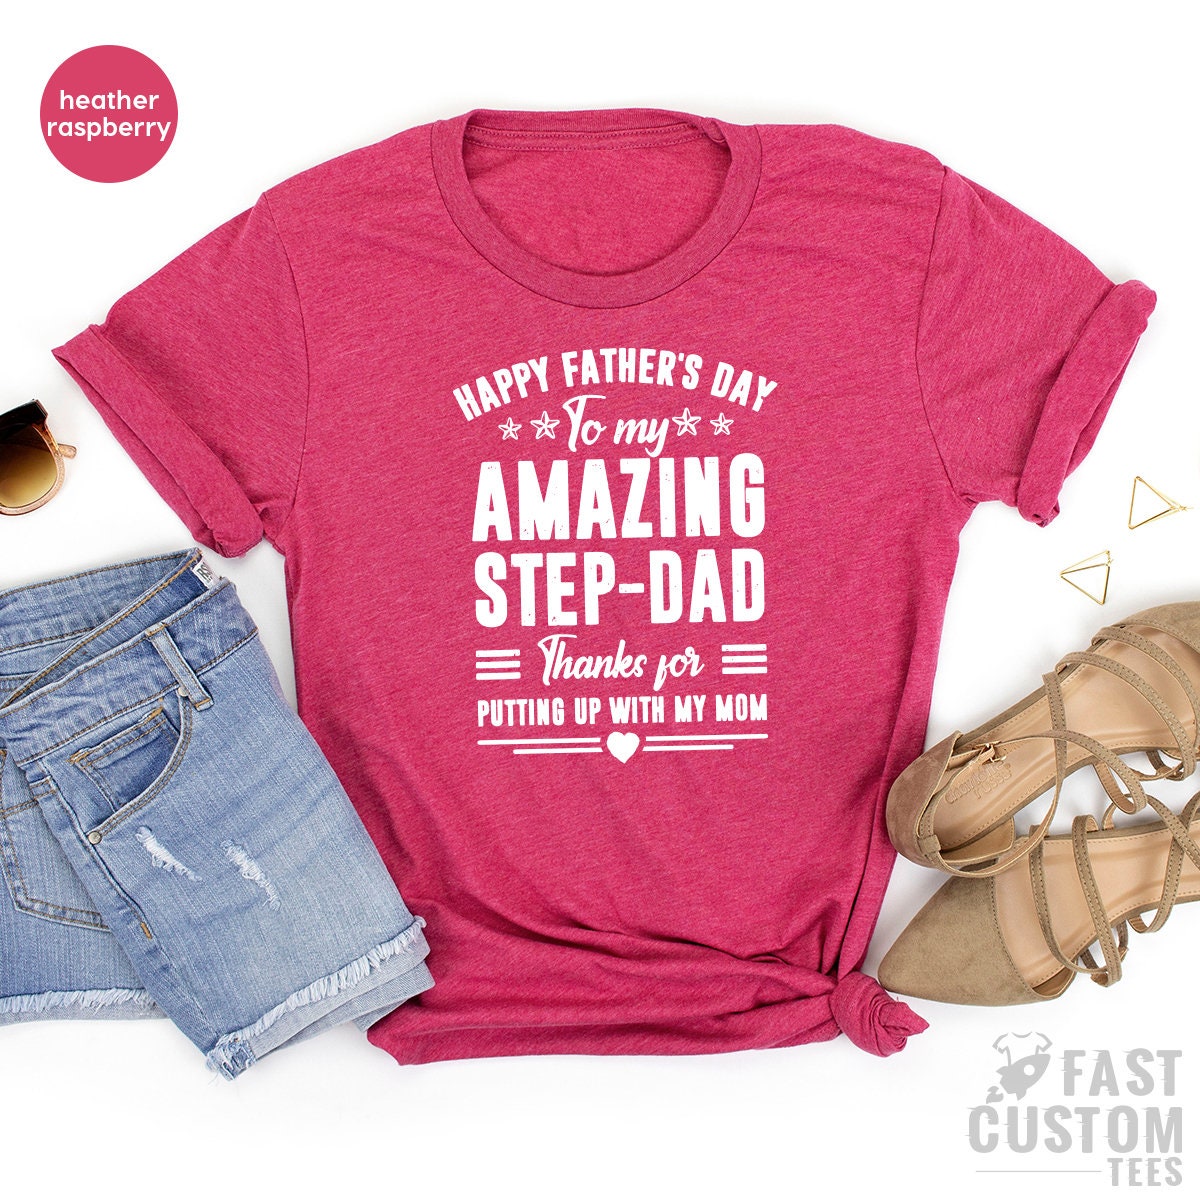 Step Dad T Sdhirt, Amazing Step-Dad Shirt, Bonus Dad Gifts, Gift For Step Father, Step Father Shirt, Bonus Daddy Tee, Dad Gifts, Dad Shirt - Fastdeliverytees.com